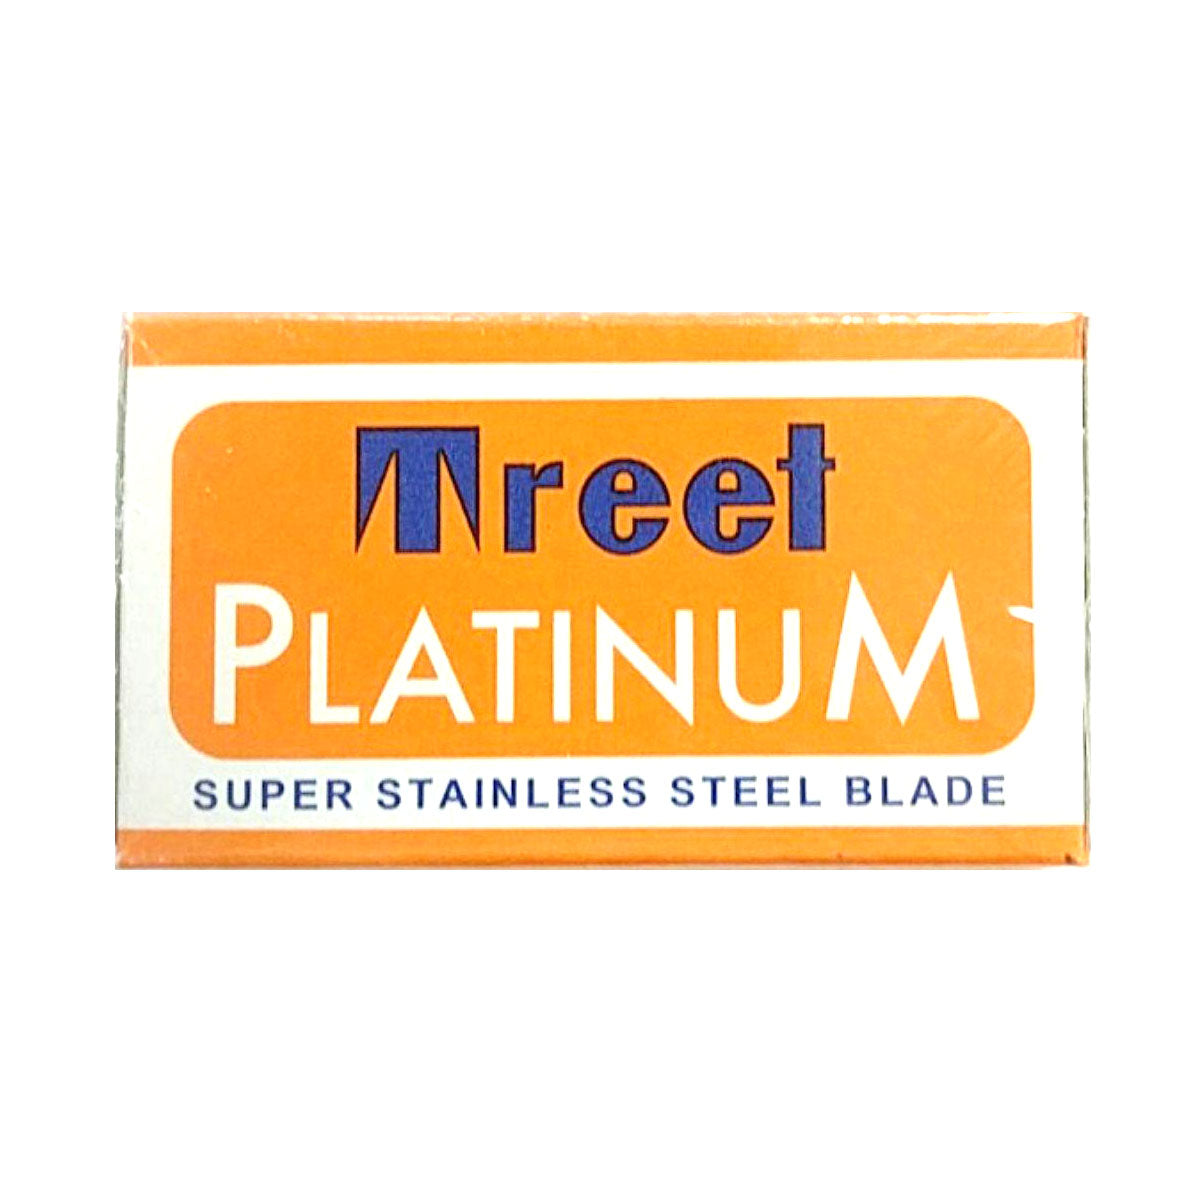 Treet Platinum Super Stainless Steel DE Razor Blades - 10 pack